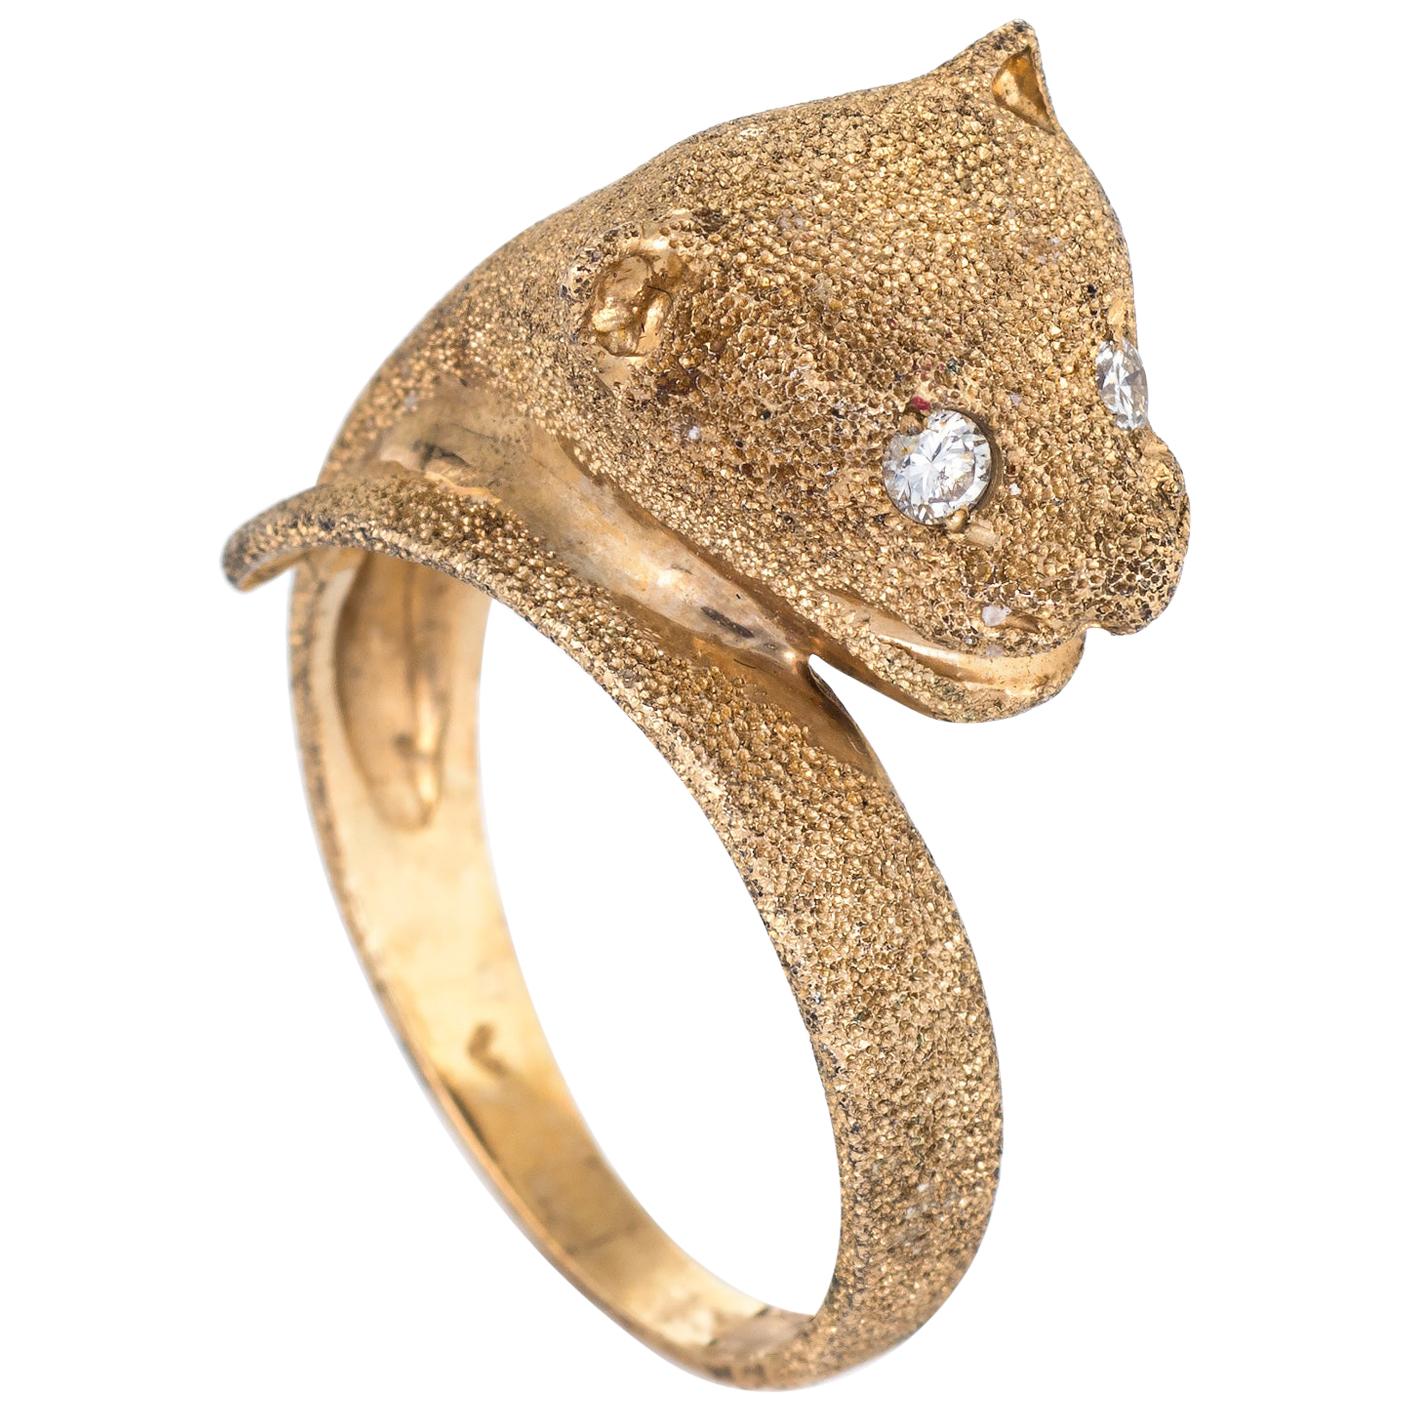 Leopard Cat Ring Vintage 14 Karat Yellow Gold Diamond Eyes Fine Estate Jewelry